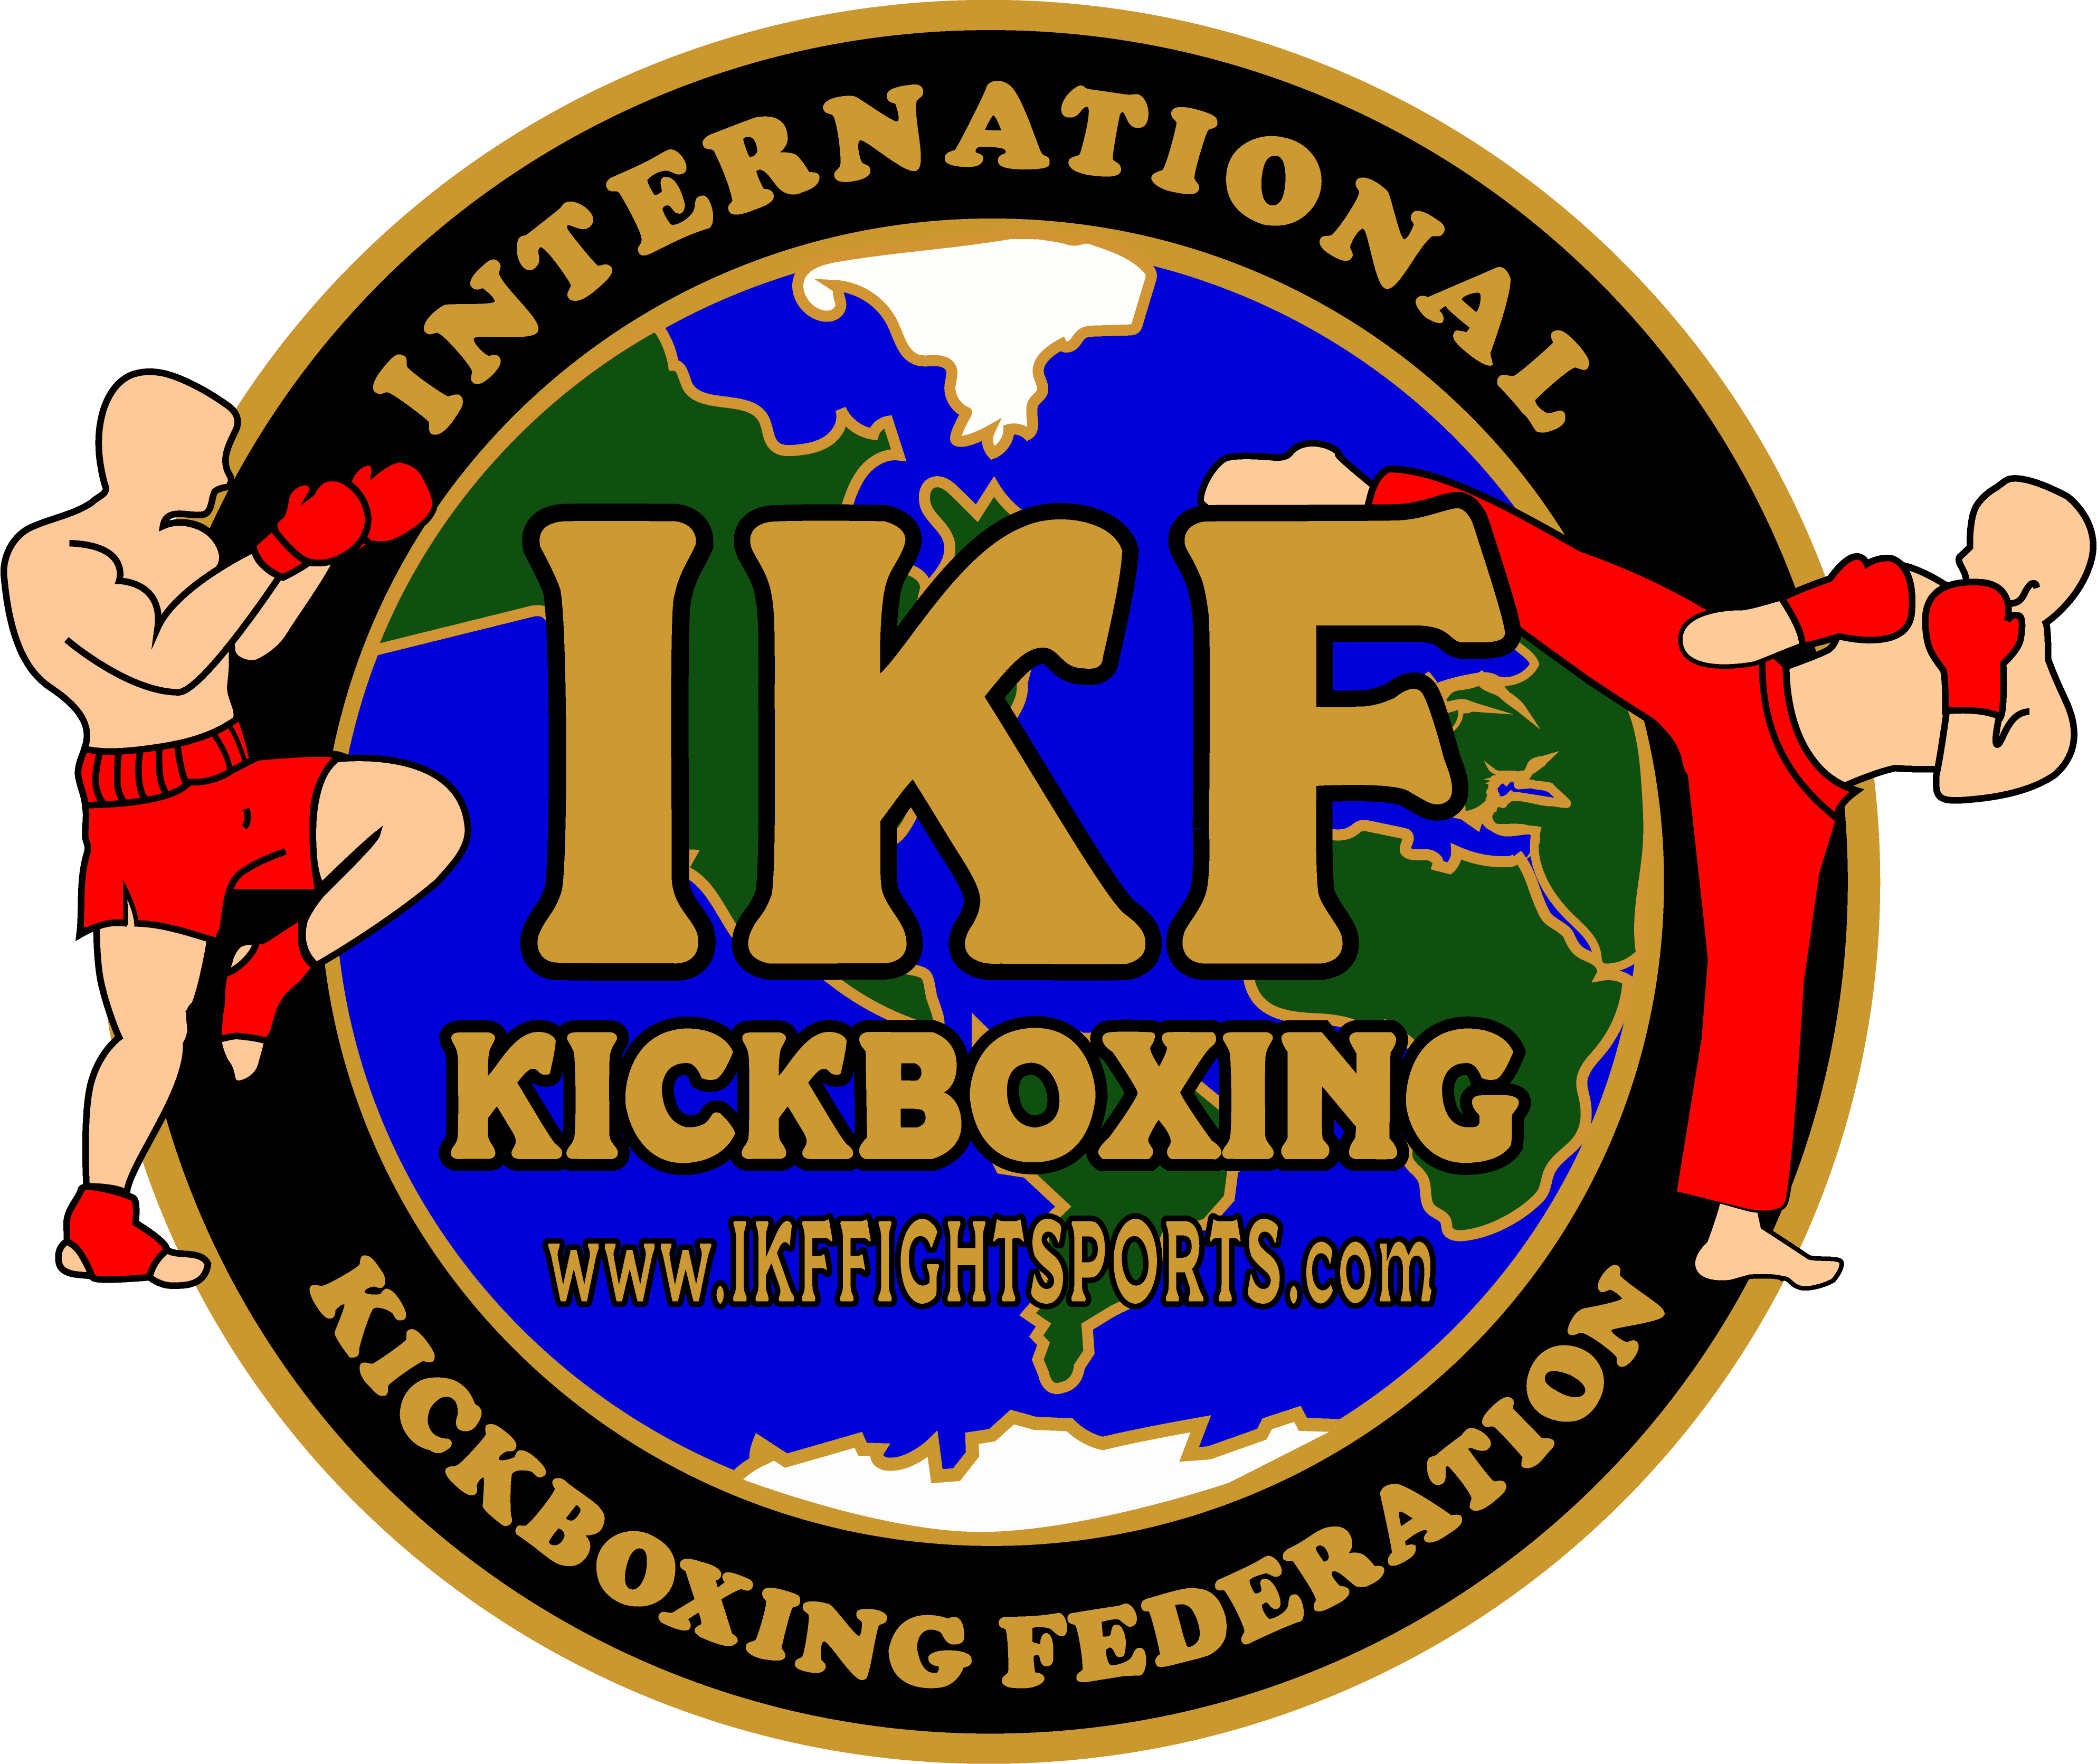 Kickboxing and Muay Thai Events - Lightning Strikes ProAm🙏